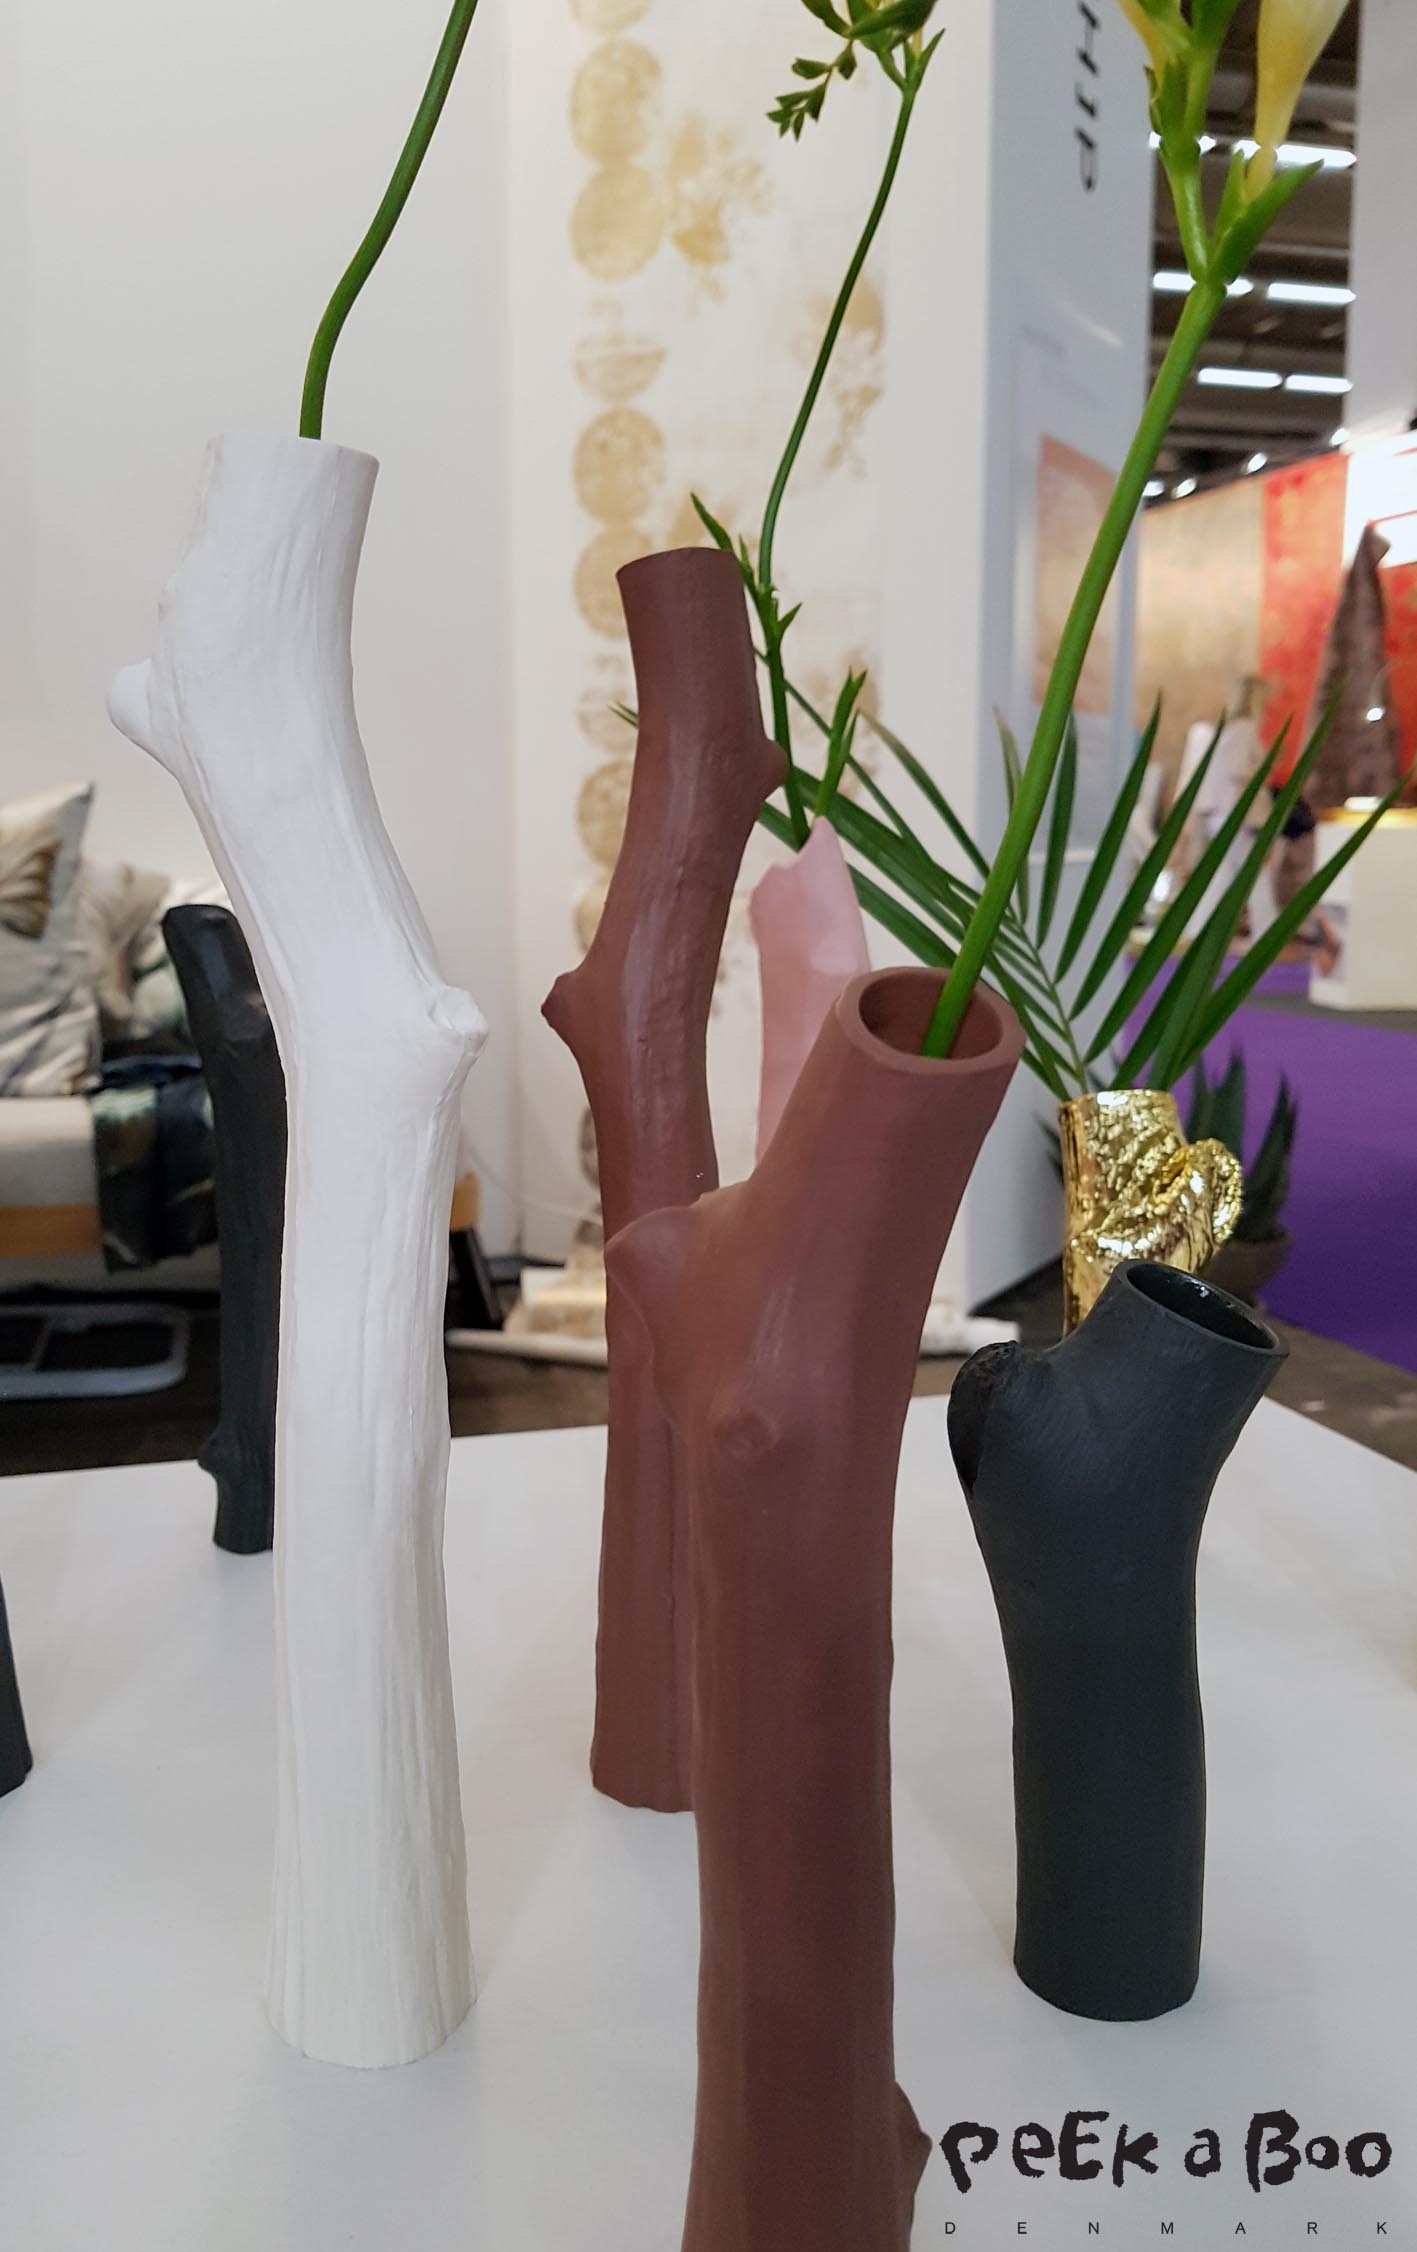 The ceramic vase "branch" designed by Jane Holmberg and sold through Designer Ship.